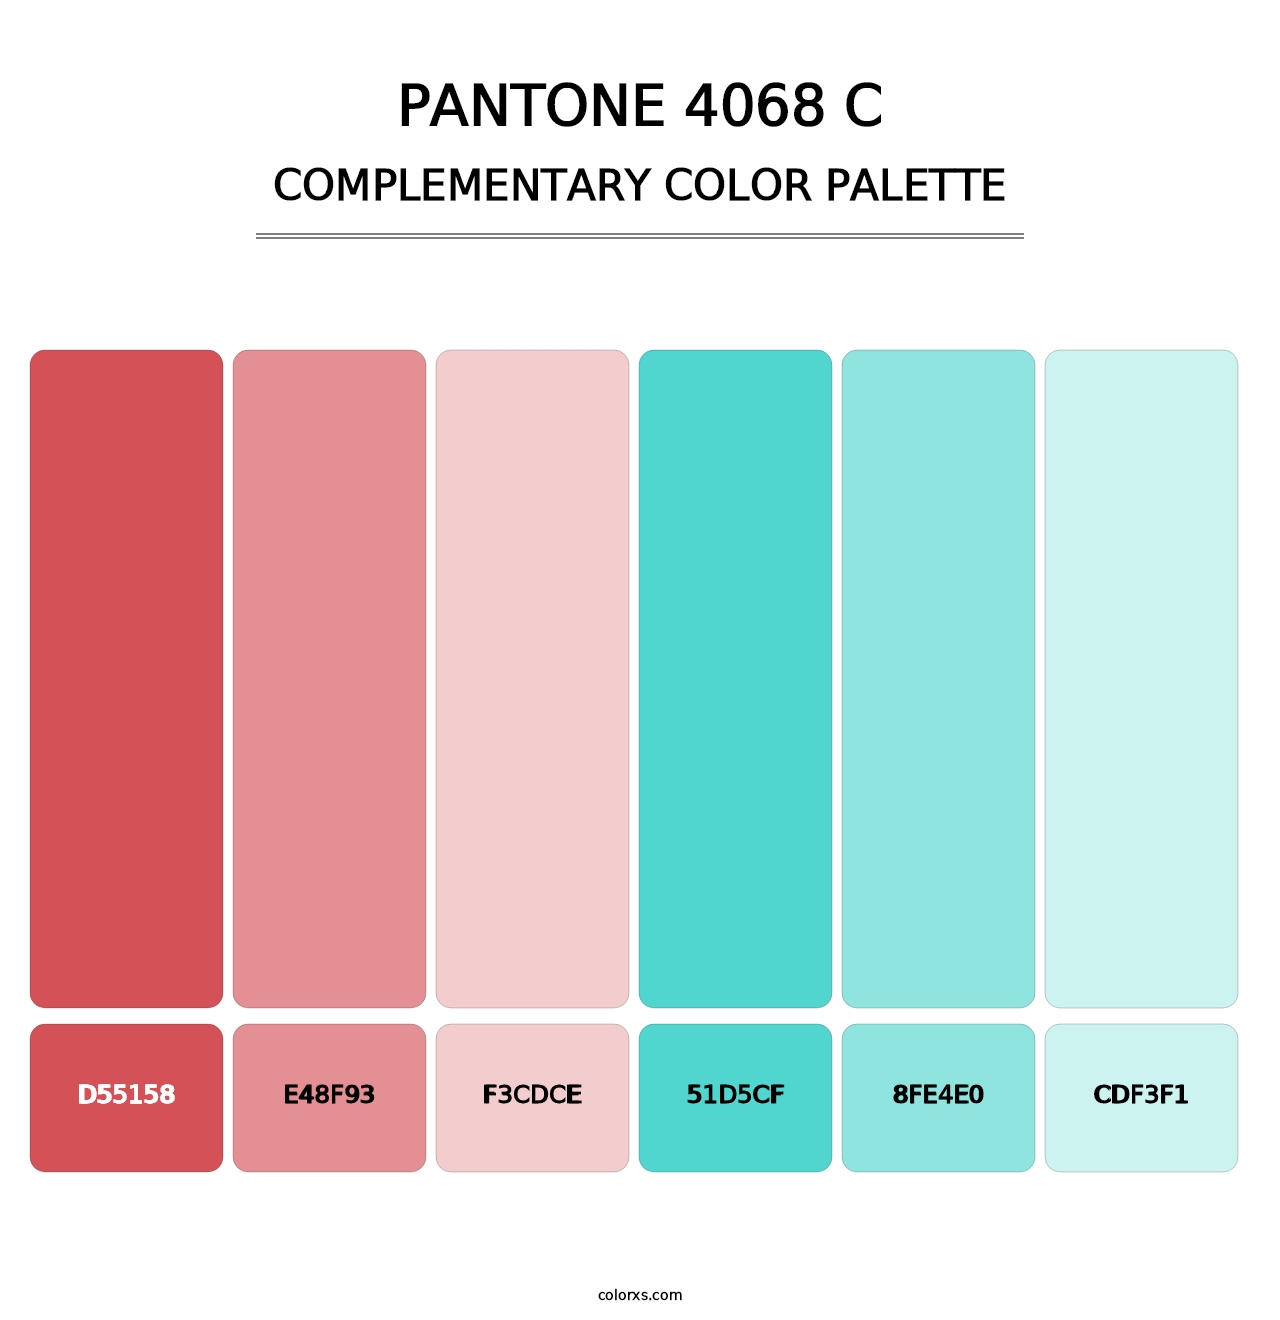 PANTONE 4068 C - Complementary Color Palette